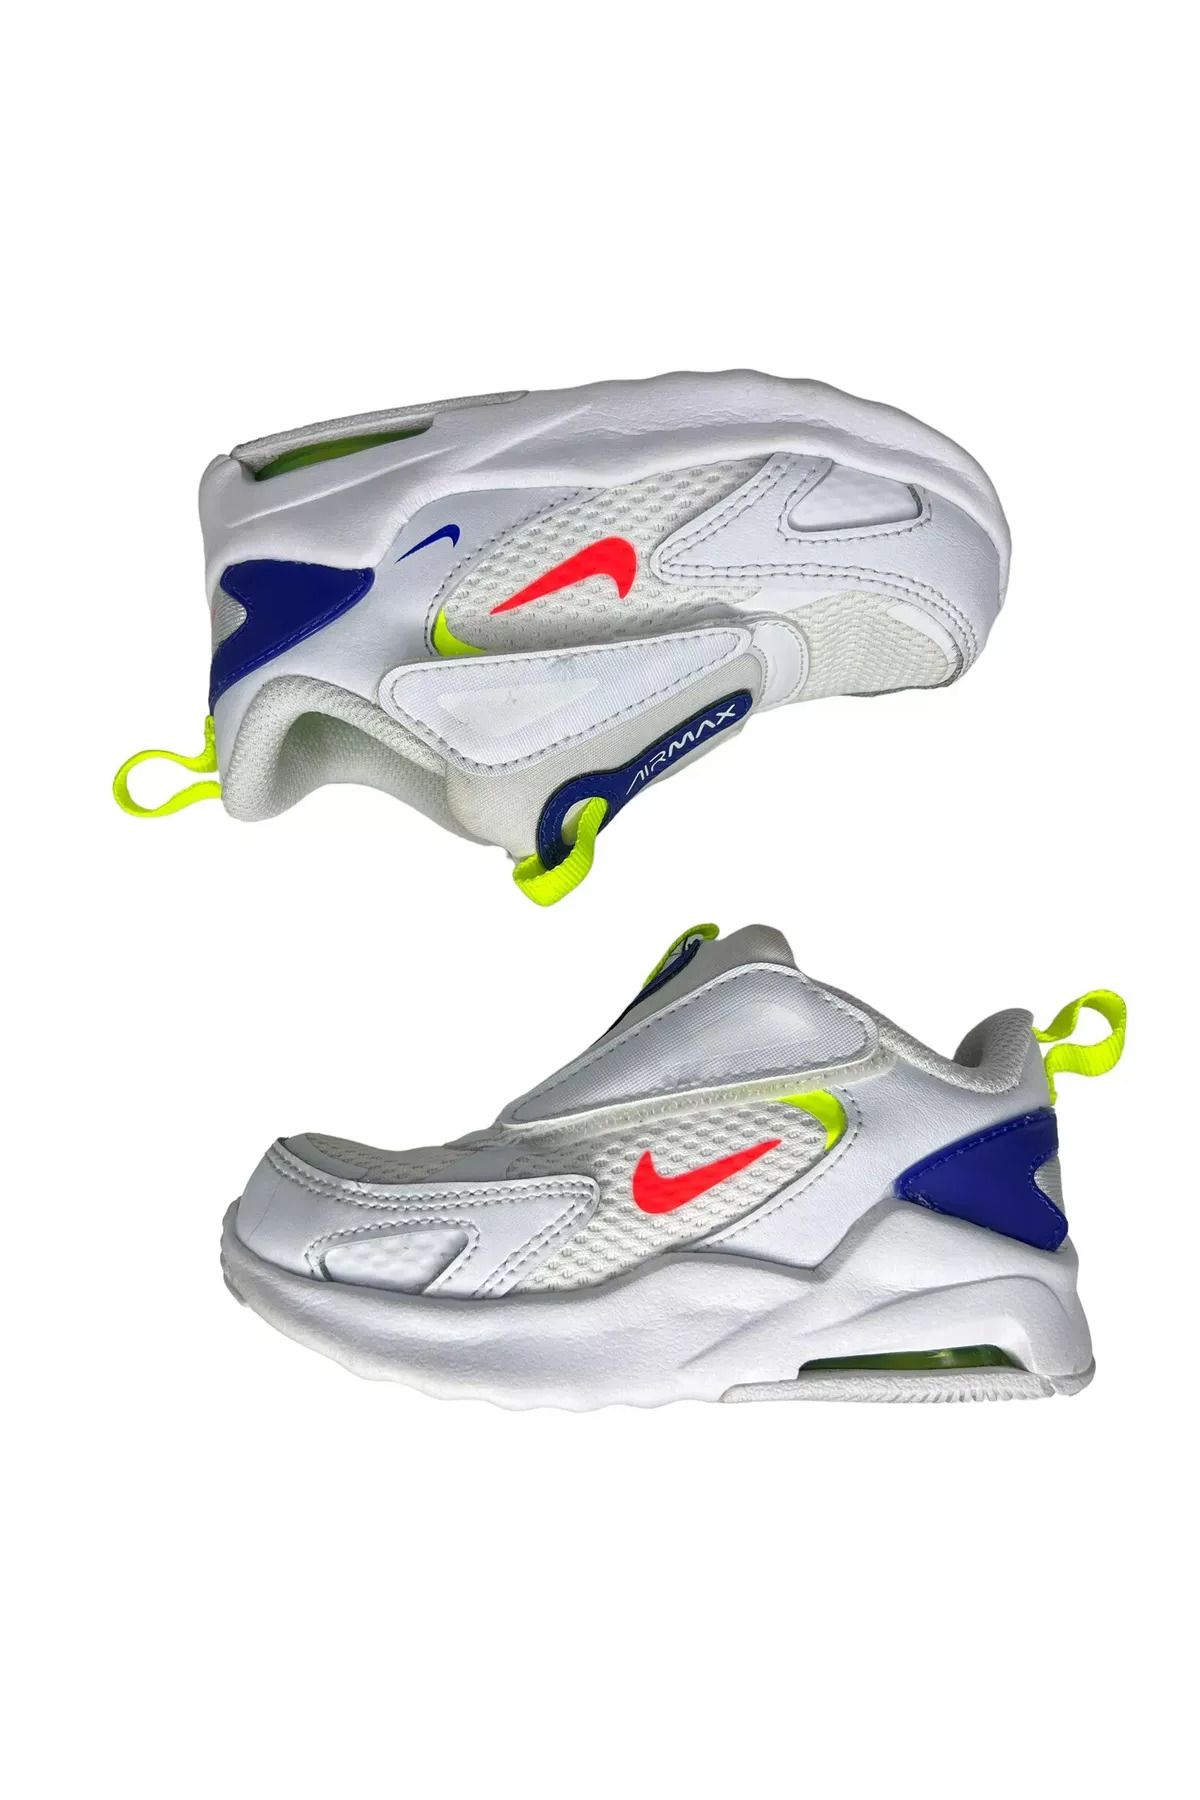 Nike Air Max Bolt CW1629-103 Ayakkabı Beyaz Mavi Parlak Sarı